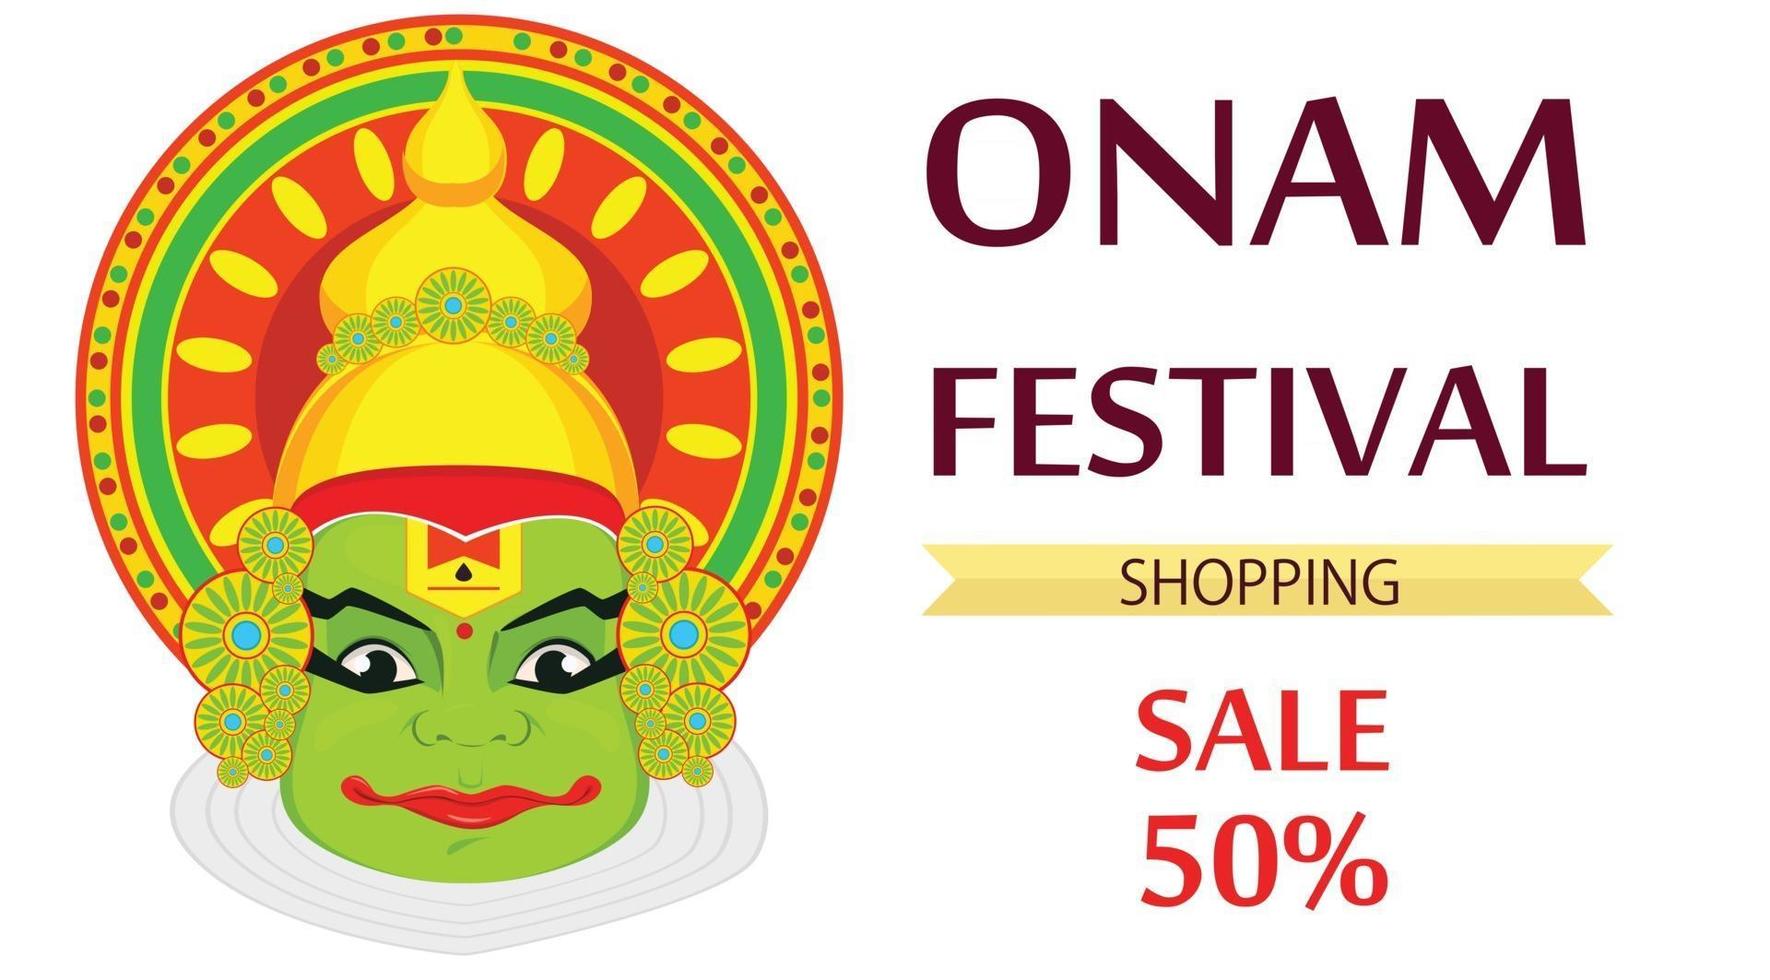 cara de kathakali con corona pesada para la celebración del festival de onam vector